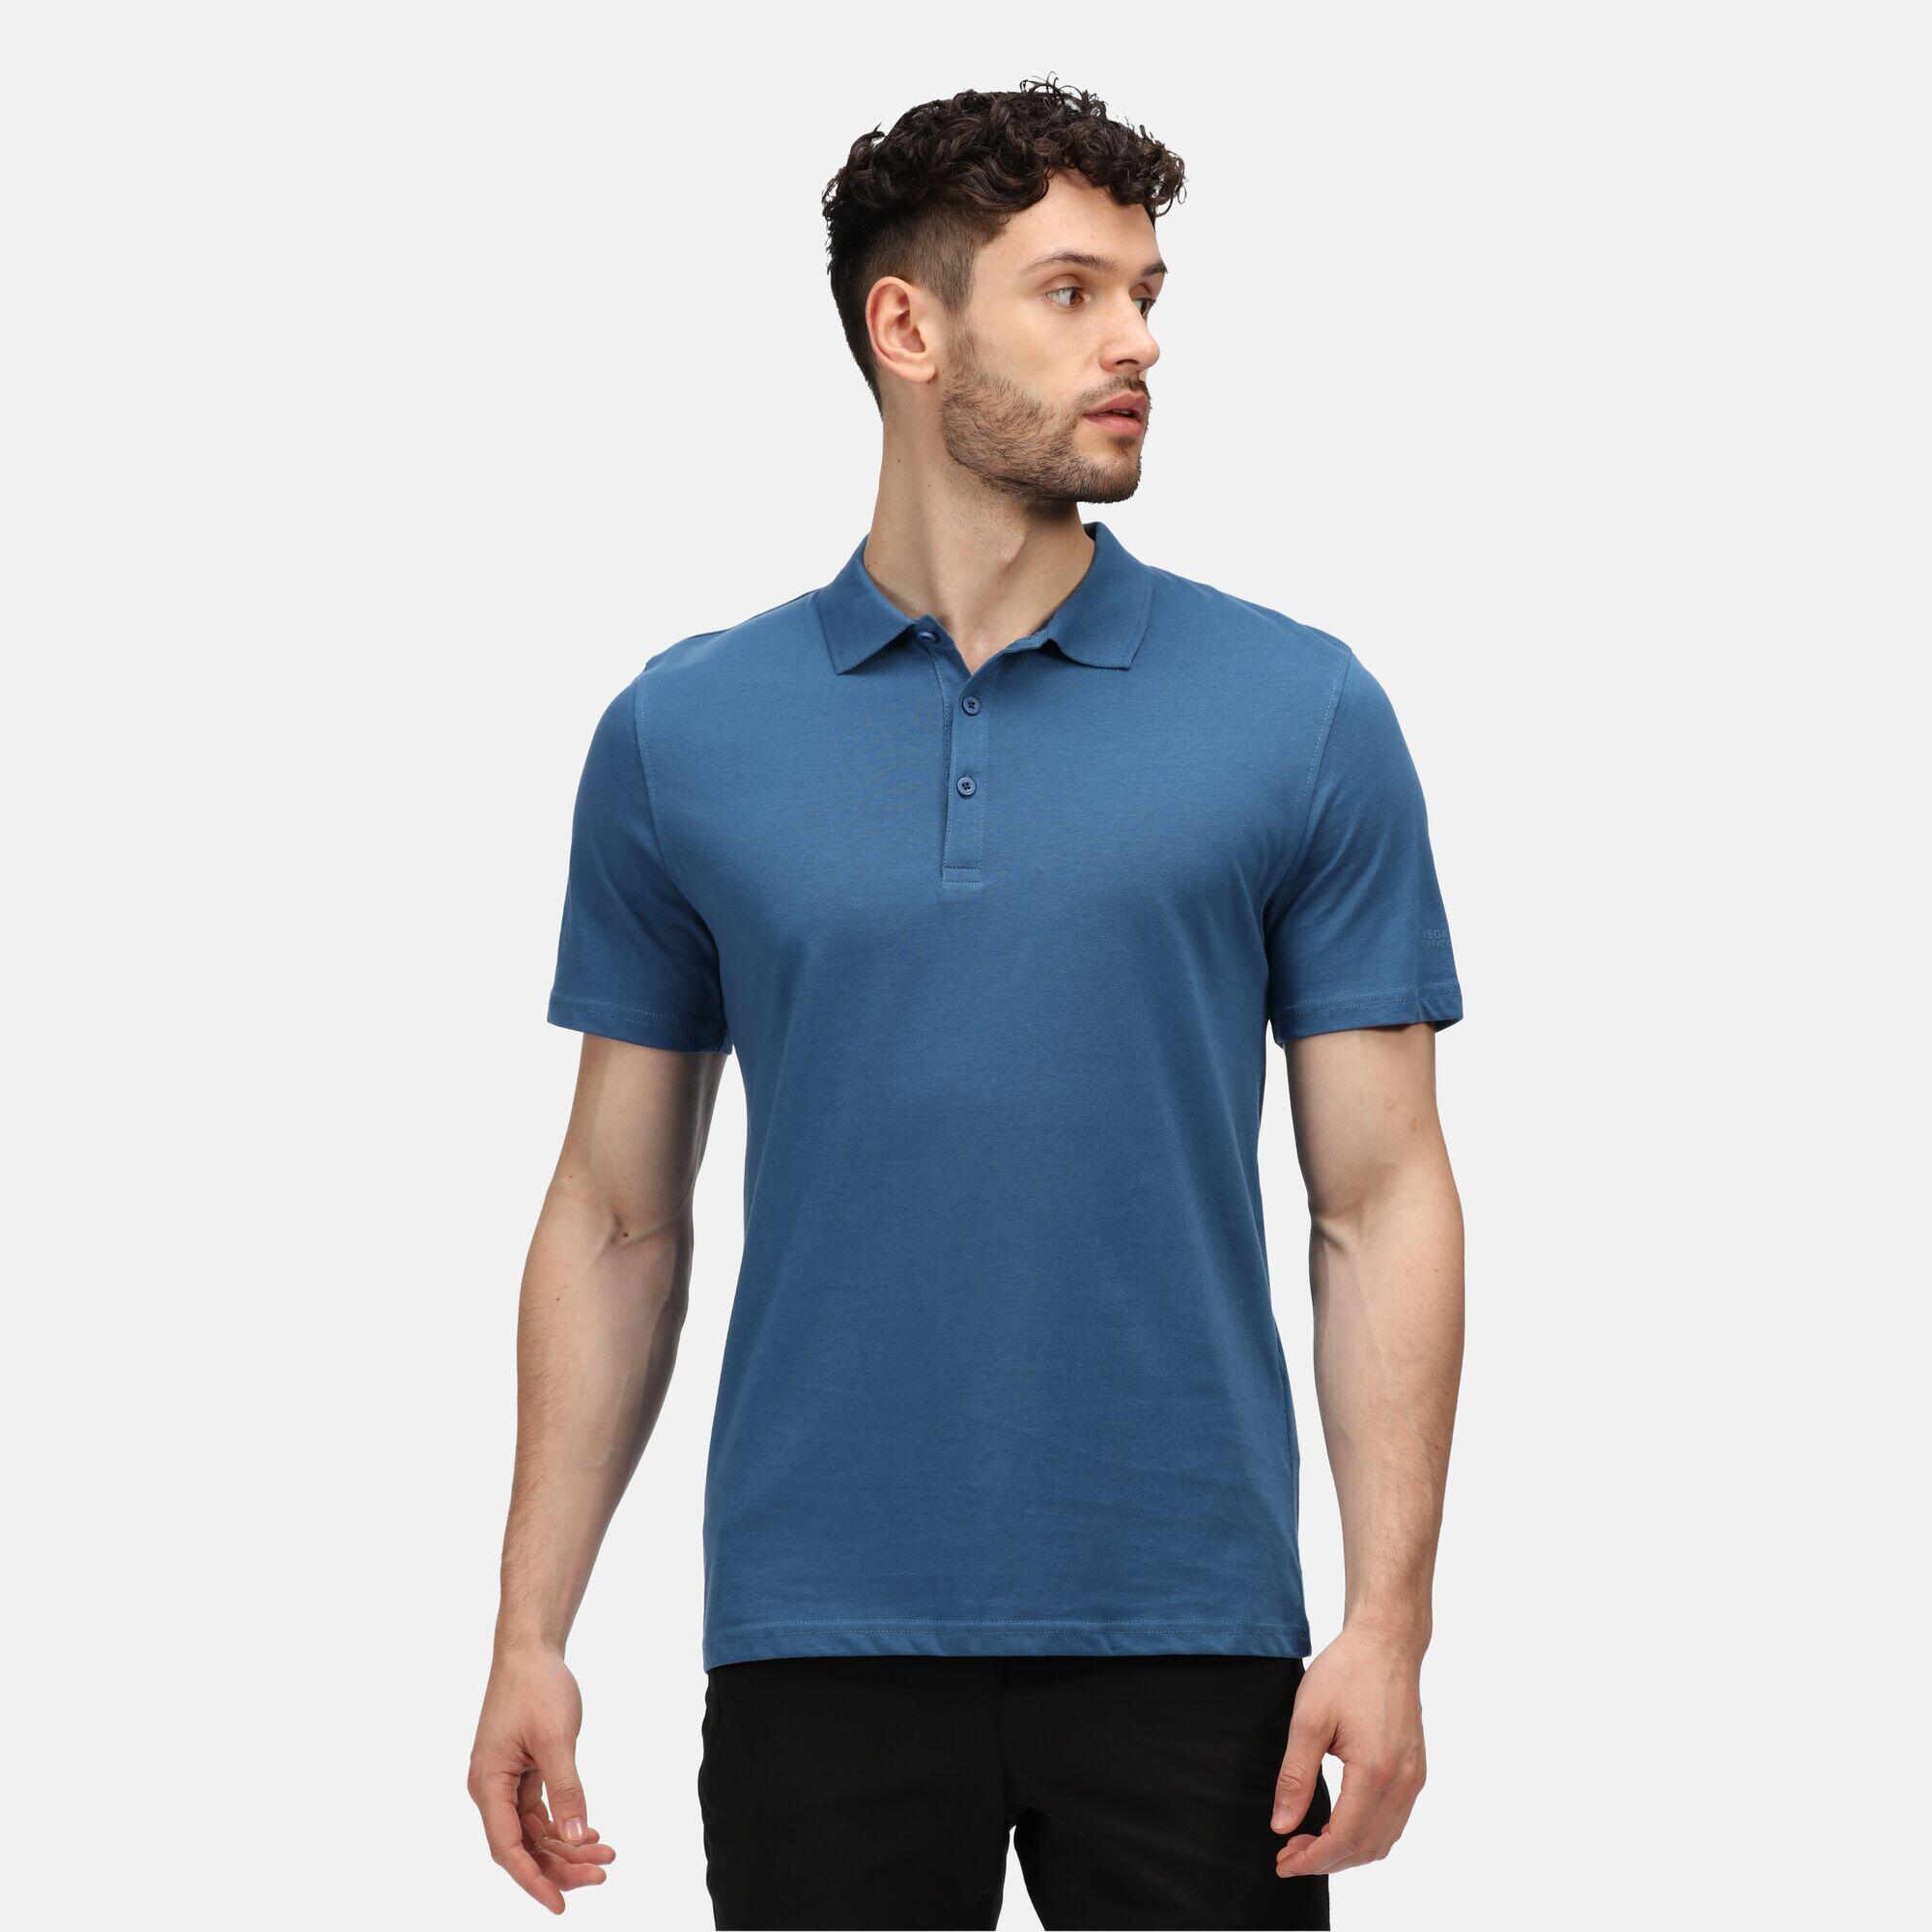 REGATTA Sinton Men's Fitness Short Sleeve Polo Shirt - Dynasty Blue